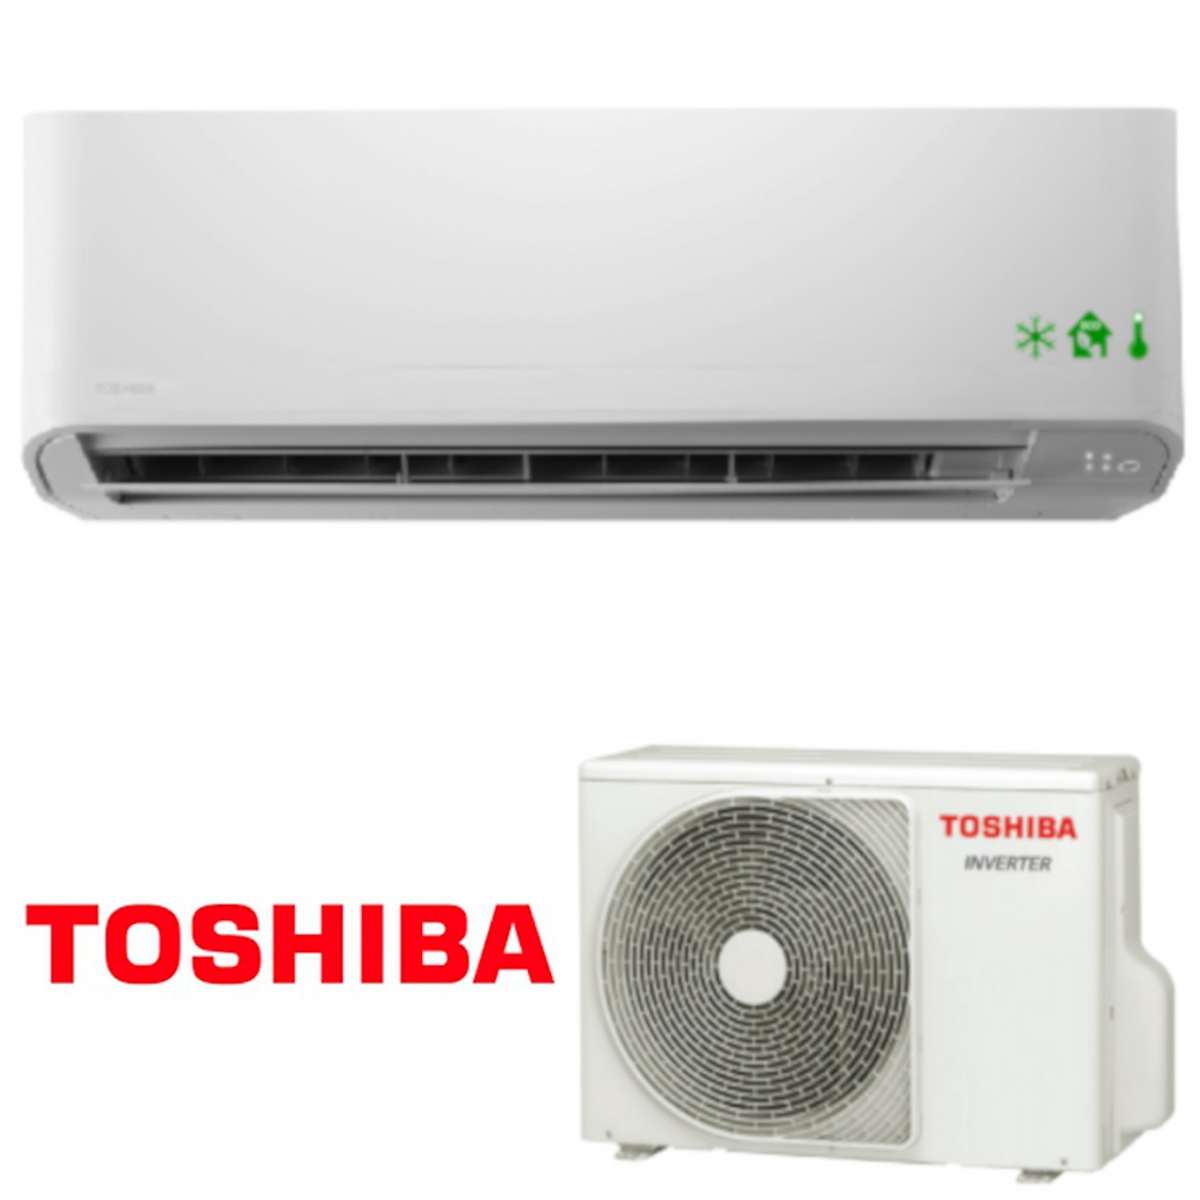 TOSHIBA SEIYA2 2.5 kW